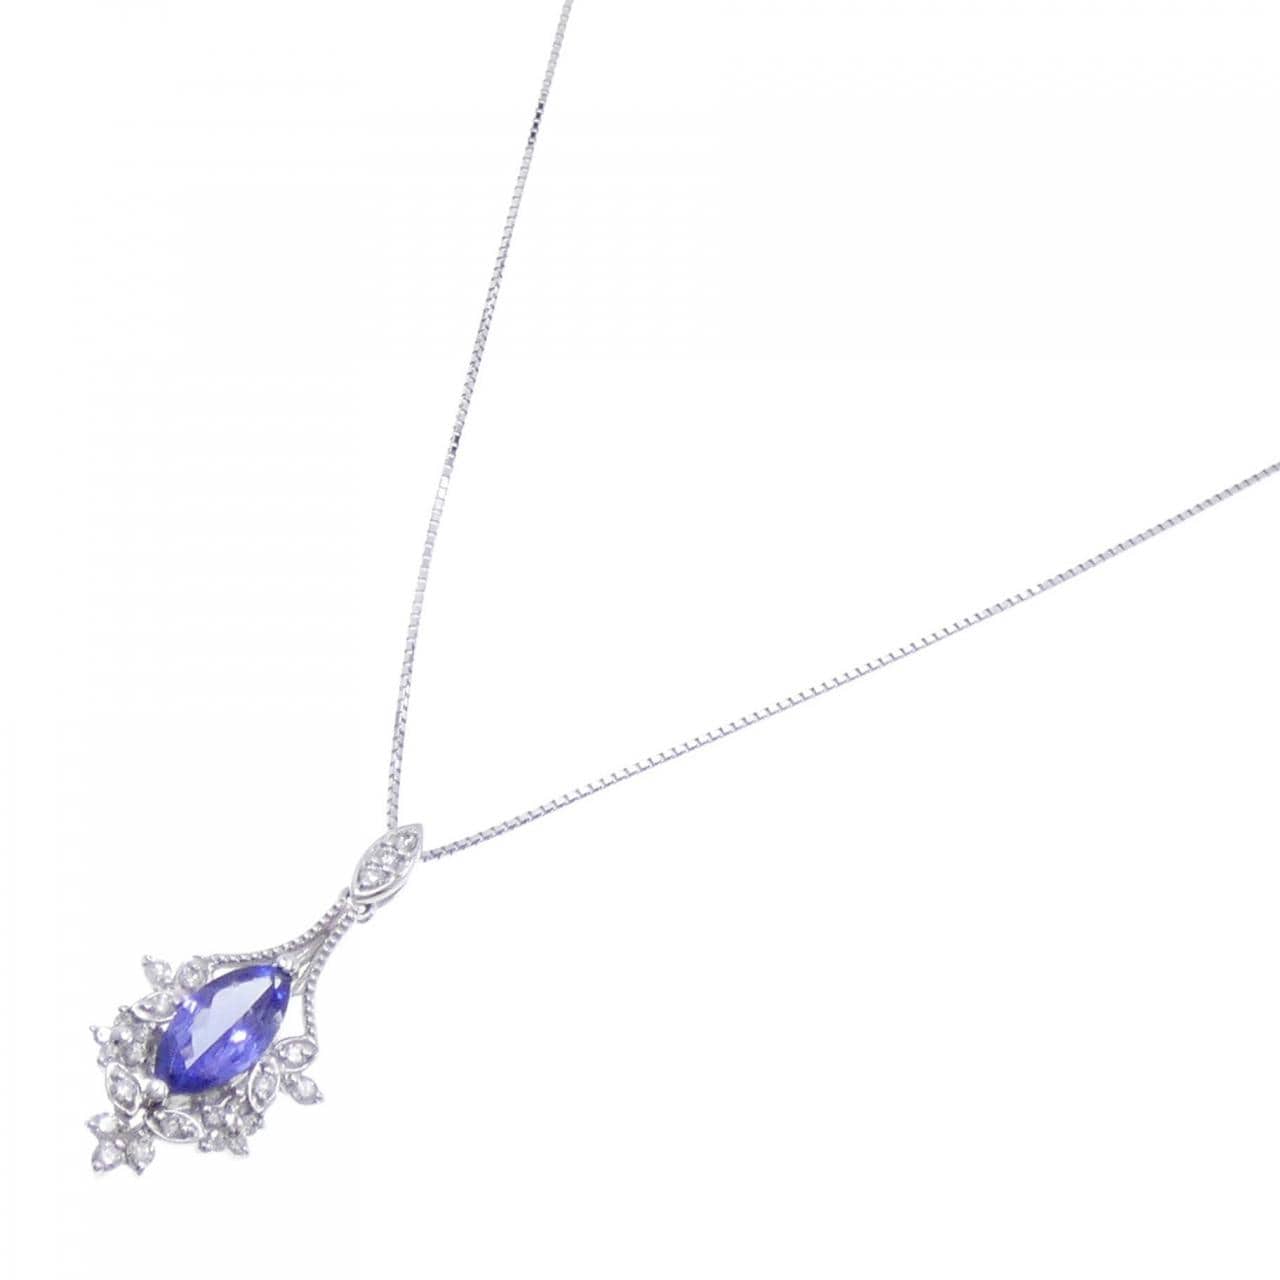 K18WG Tanzanite necklace 0.98CT